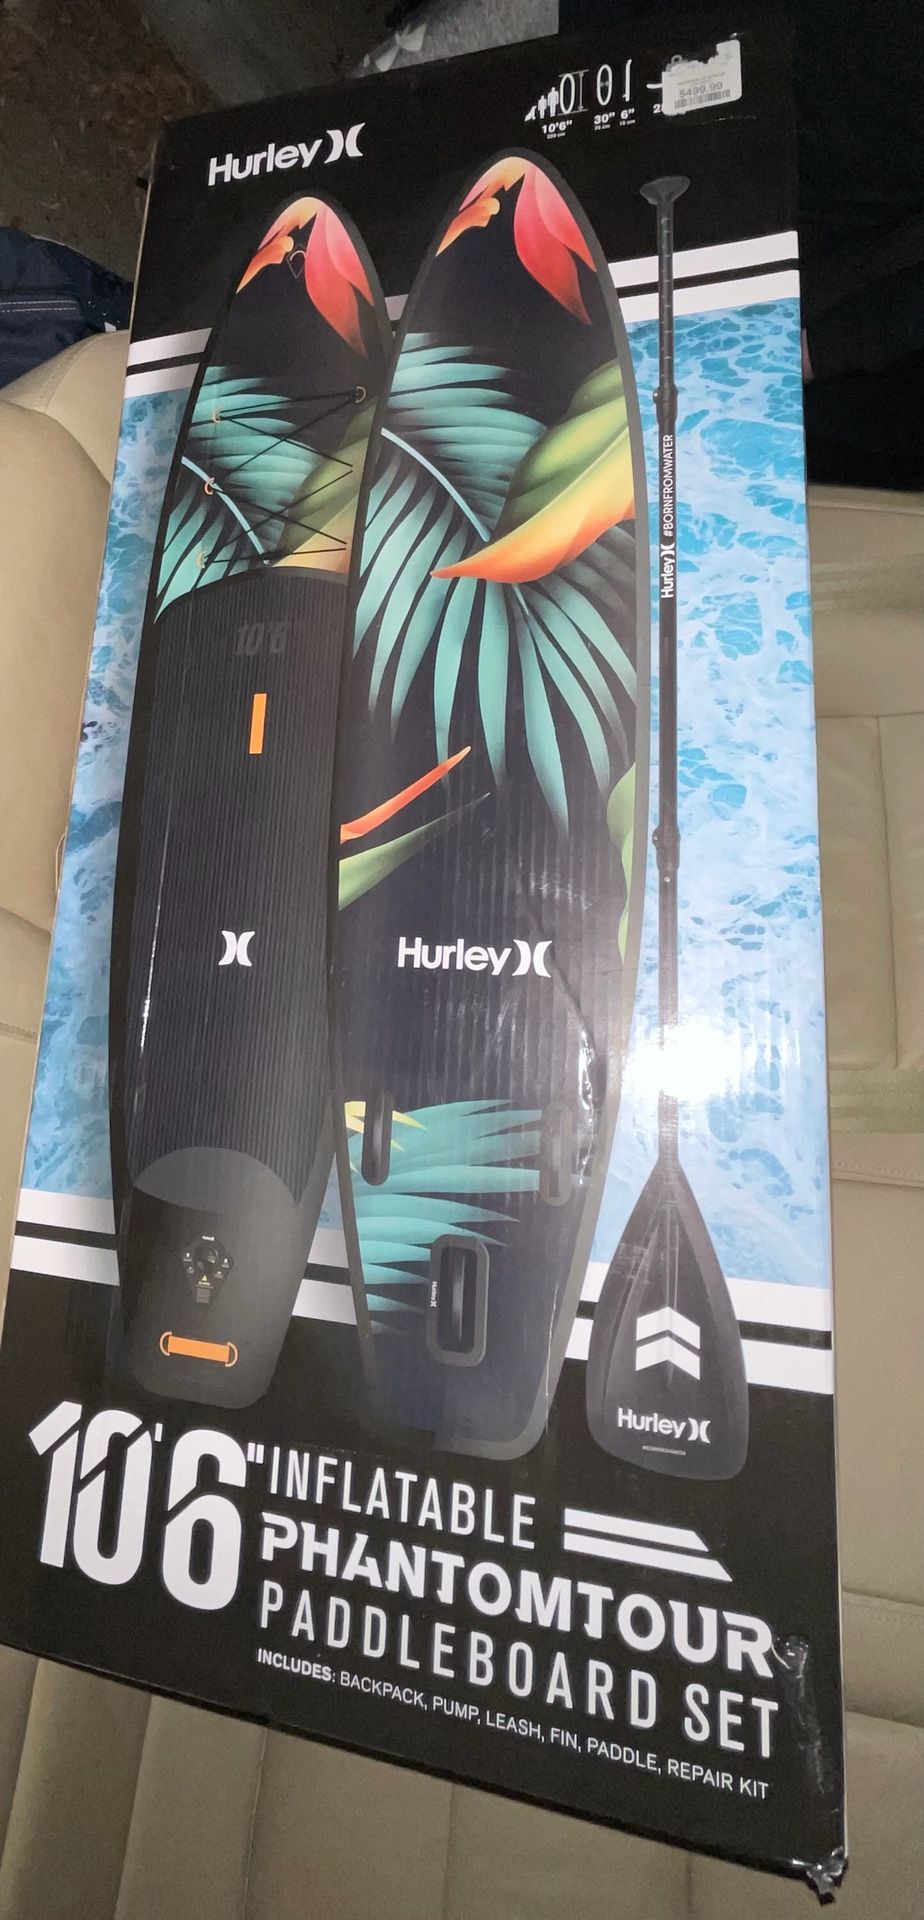 Hurley 10’6” Inflatable Phantomtour Paddleboard Set